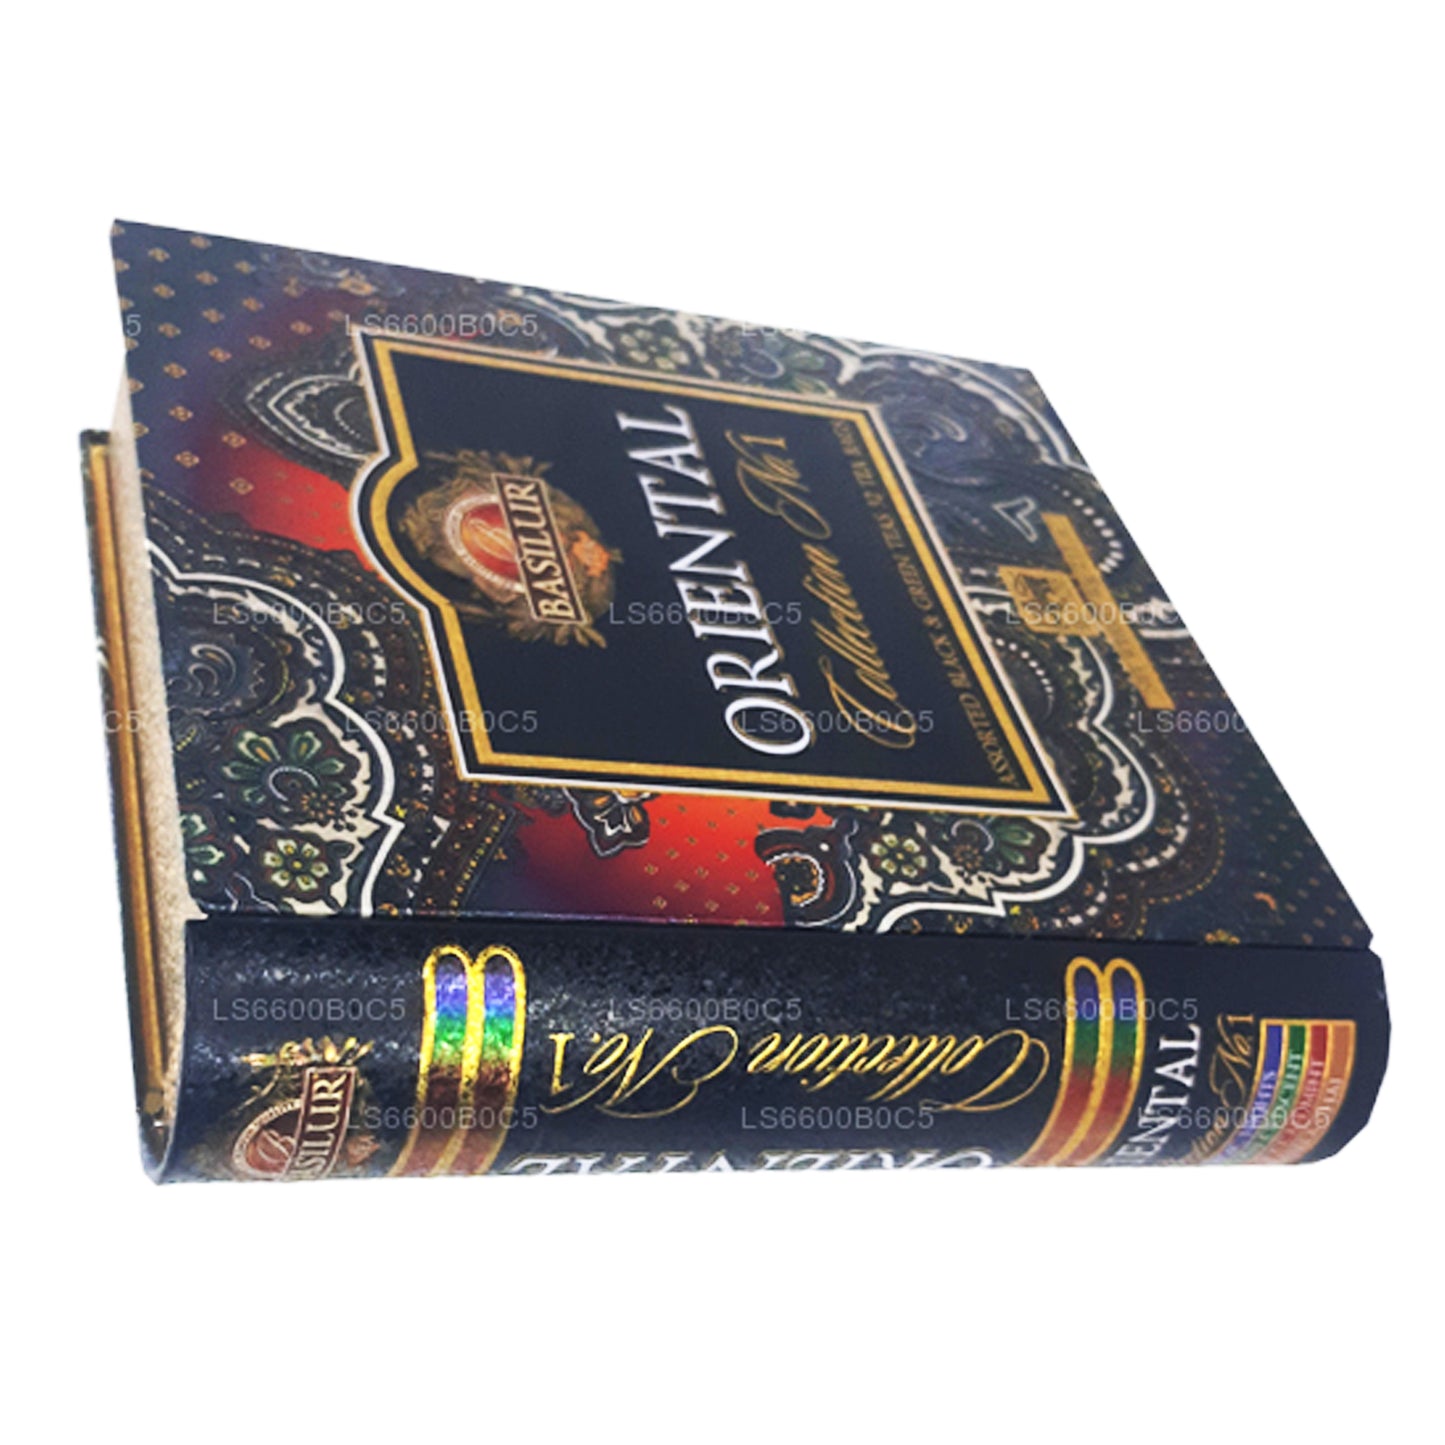 Basilur Oriental Collection Tea book Vol 1 (60g) 32 Tea Bags